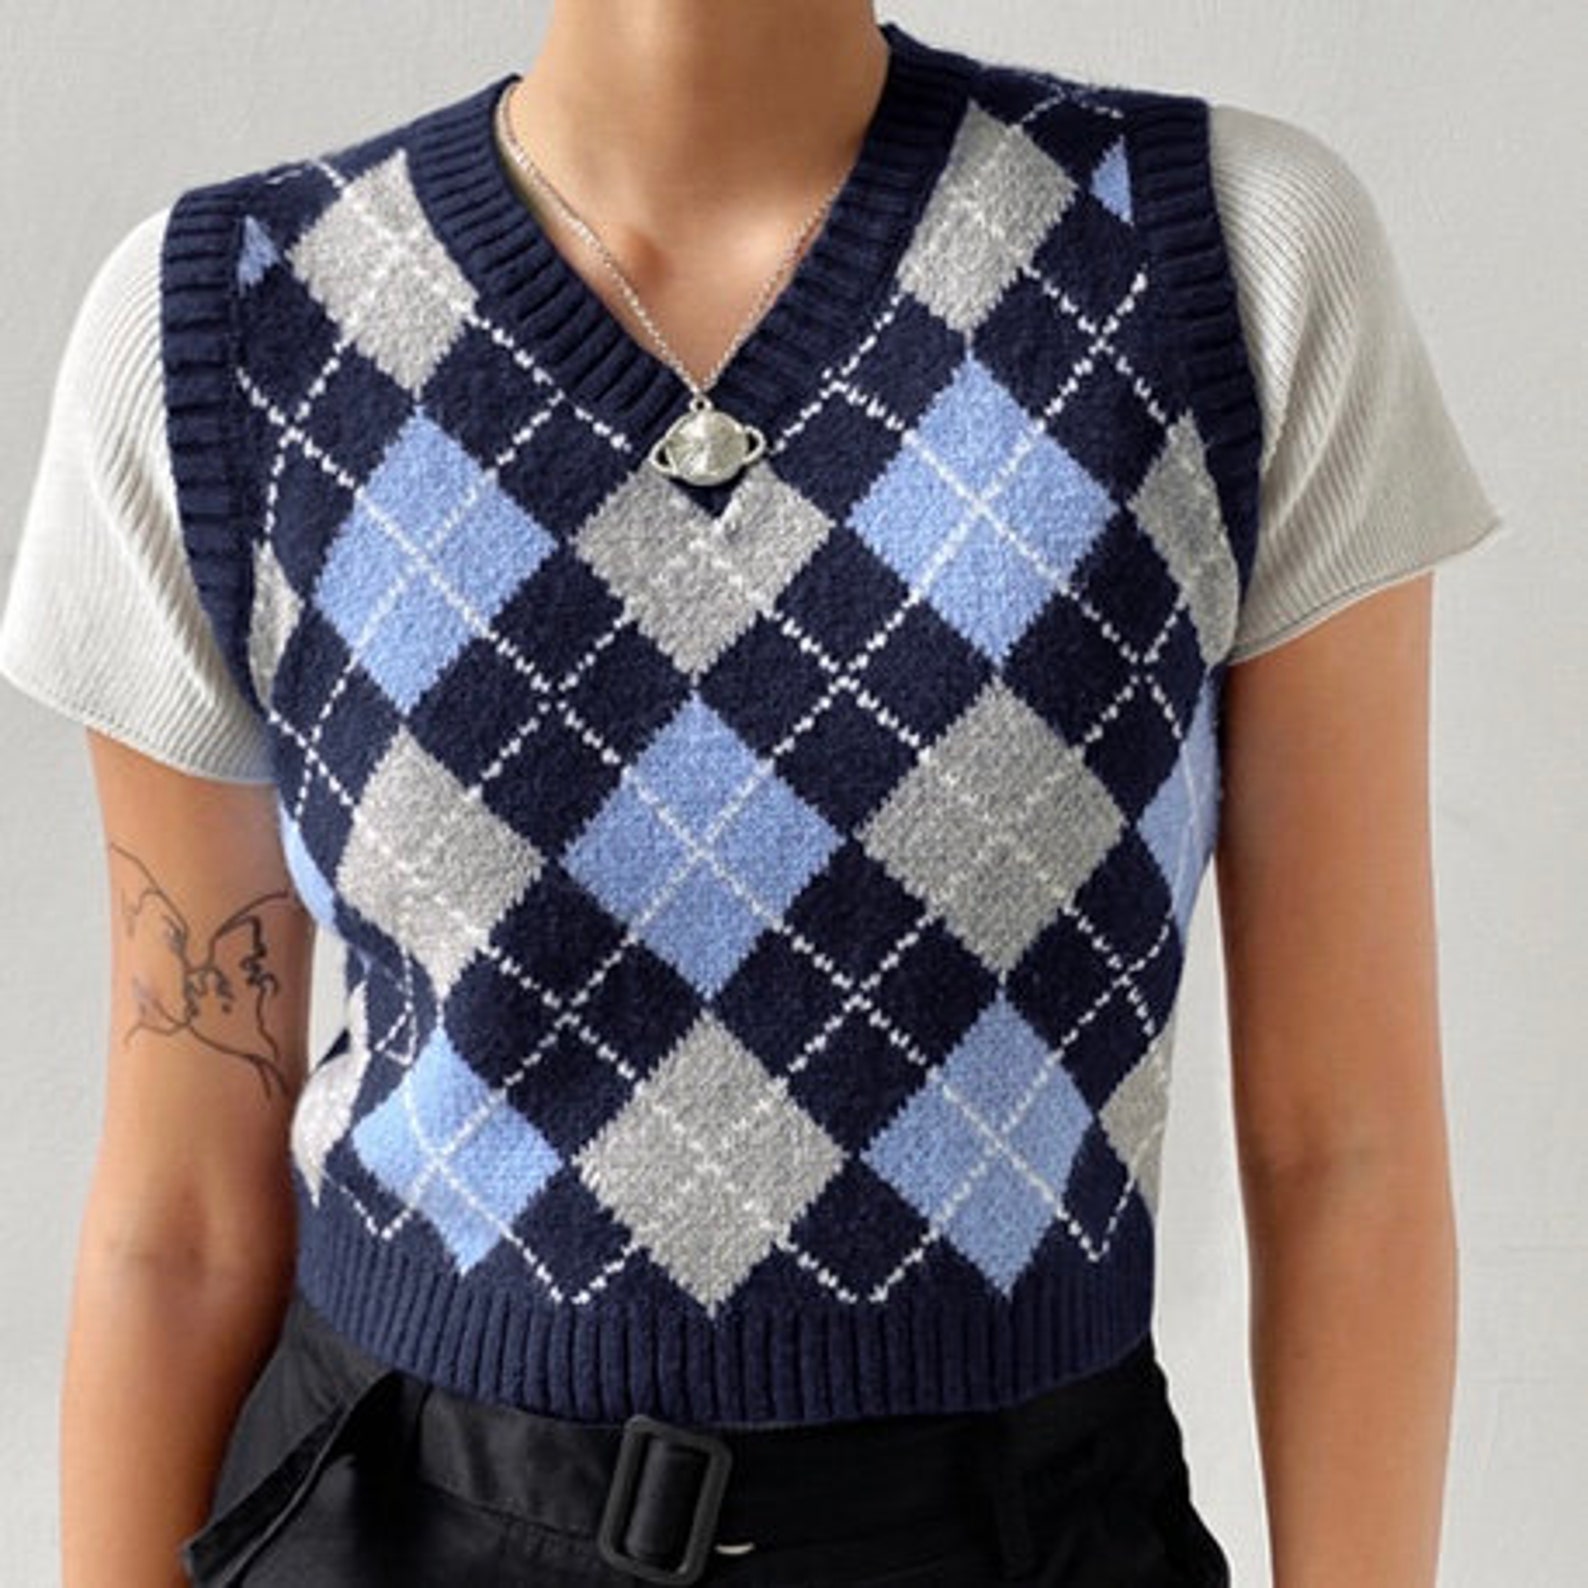 Argyle sweater vest crop style Vneck knitwear in navy blue | Etsy